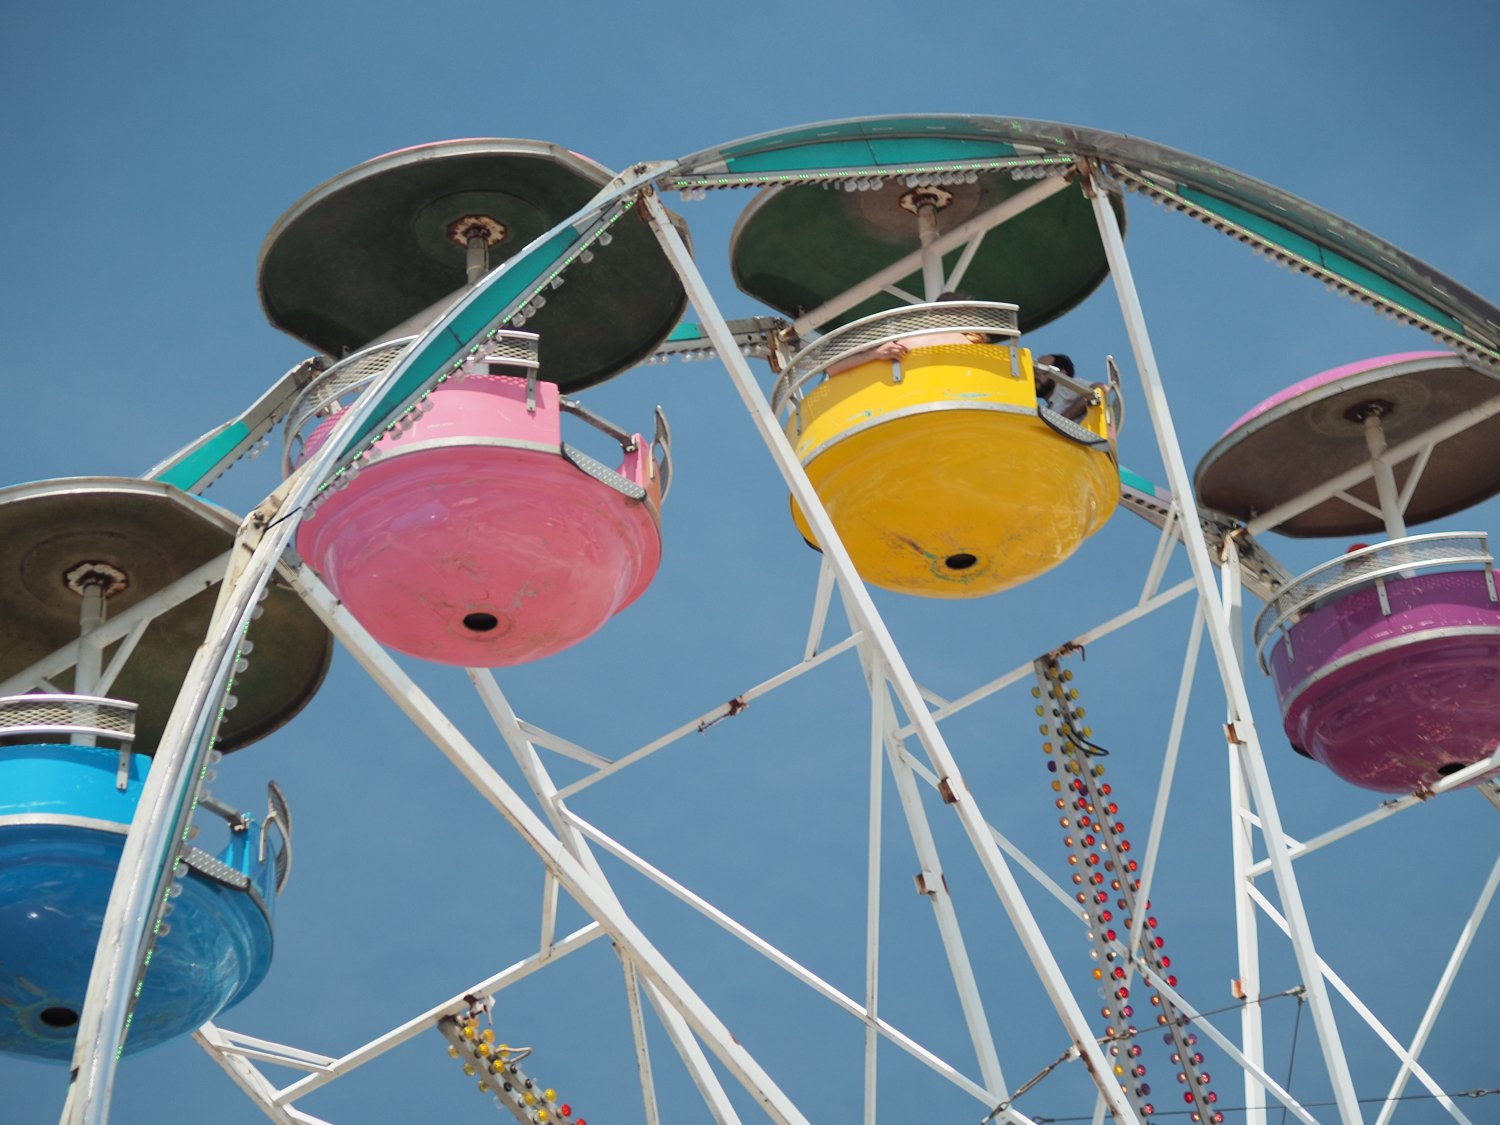 Ferris wheel — copyright Trace Meek